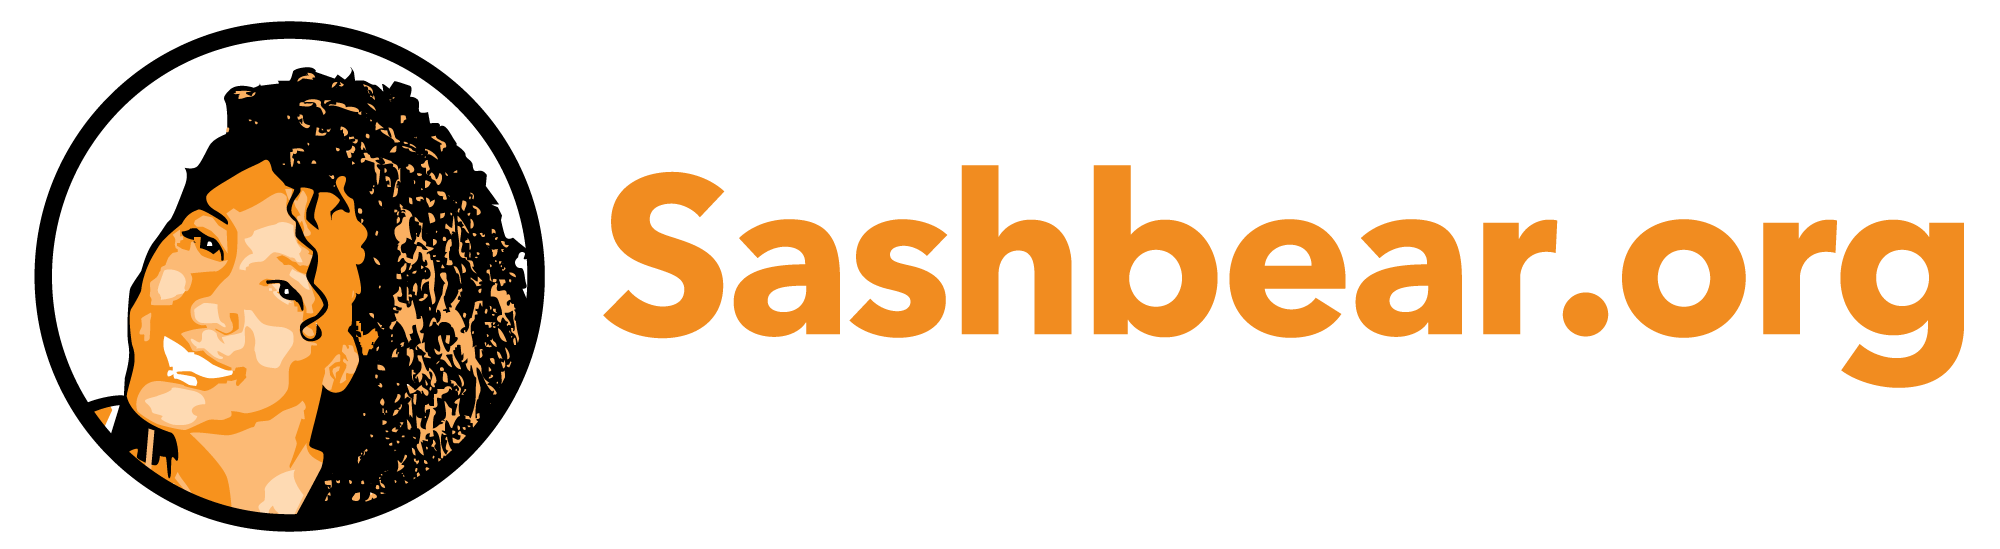 The Sashbear Foundation logo